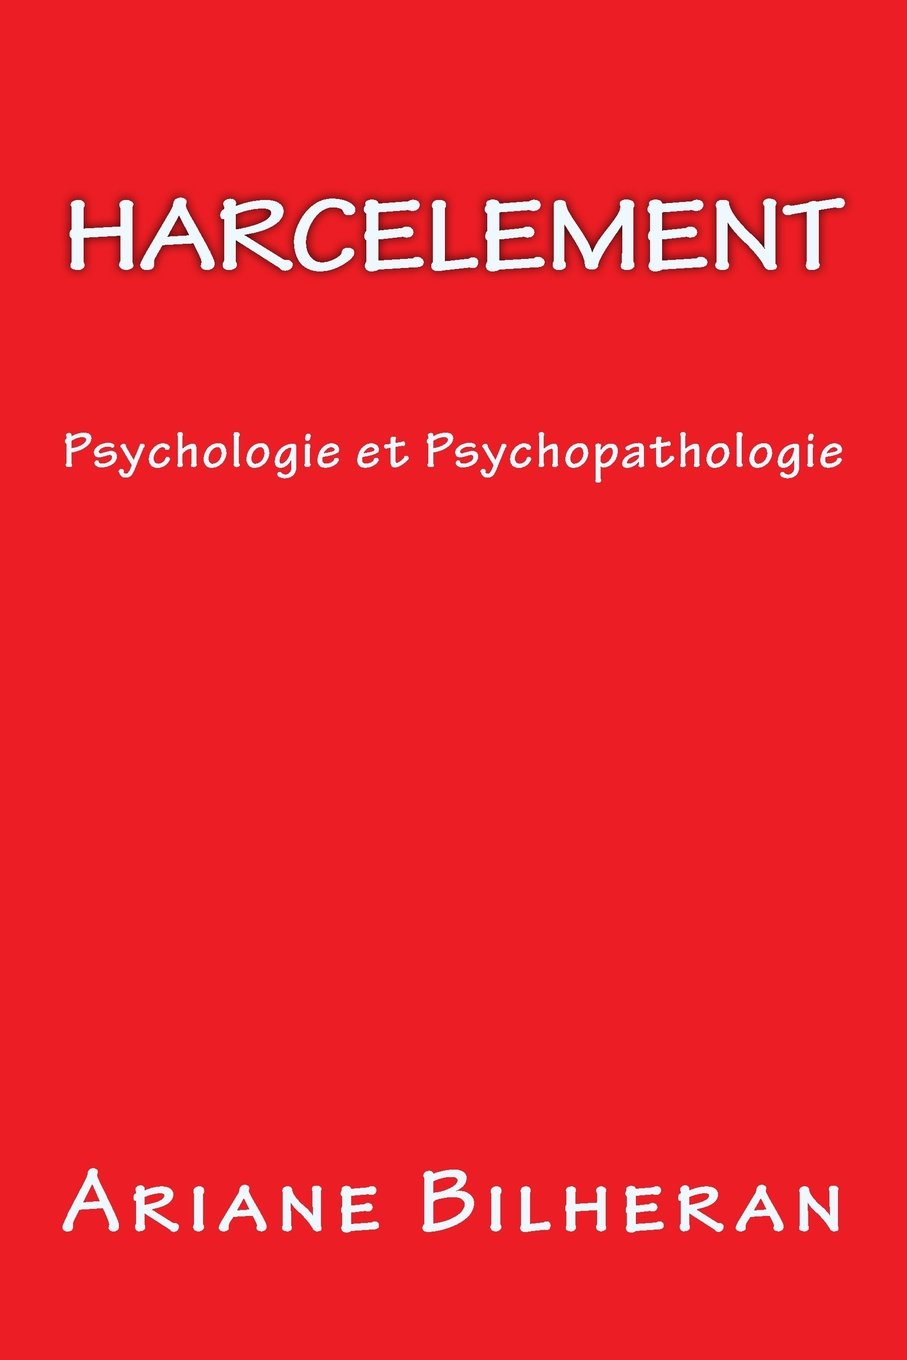 Harcelement: Psychologie et Psychopathologie